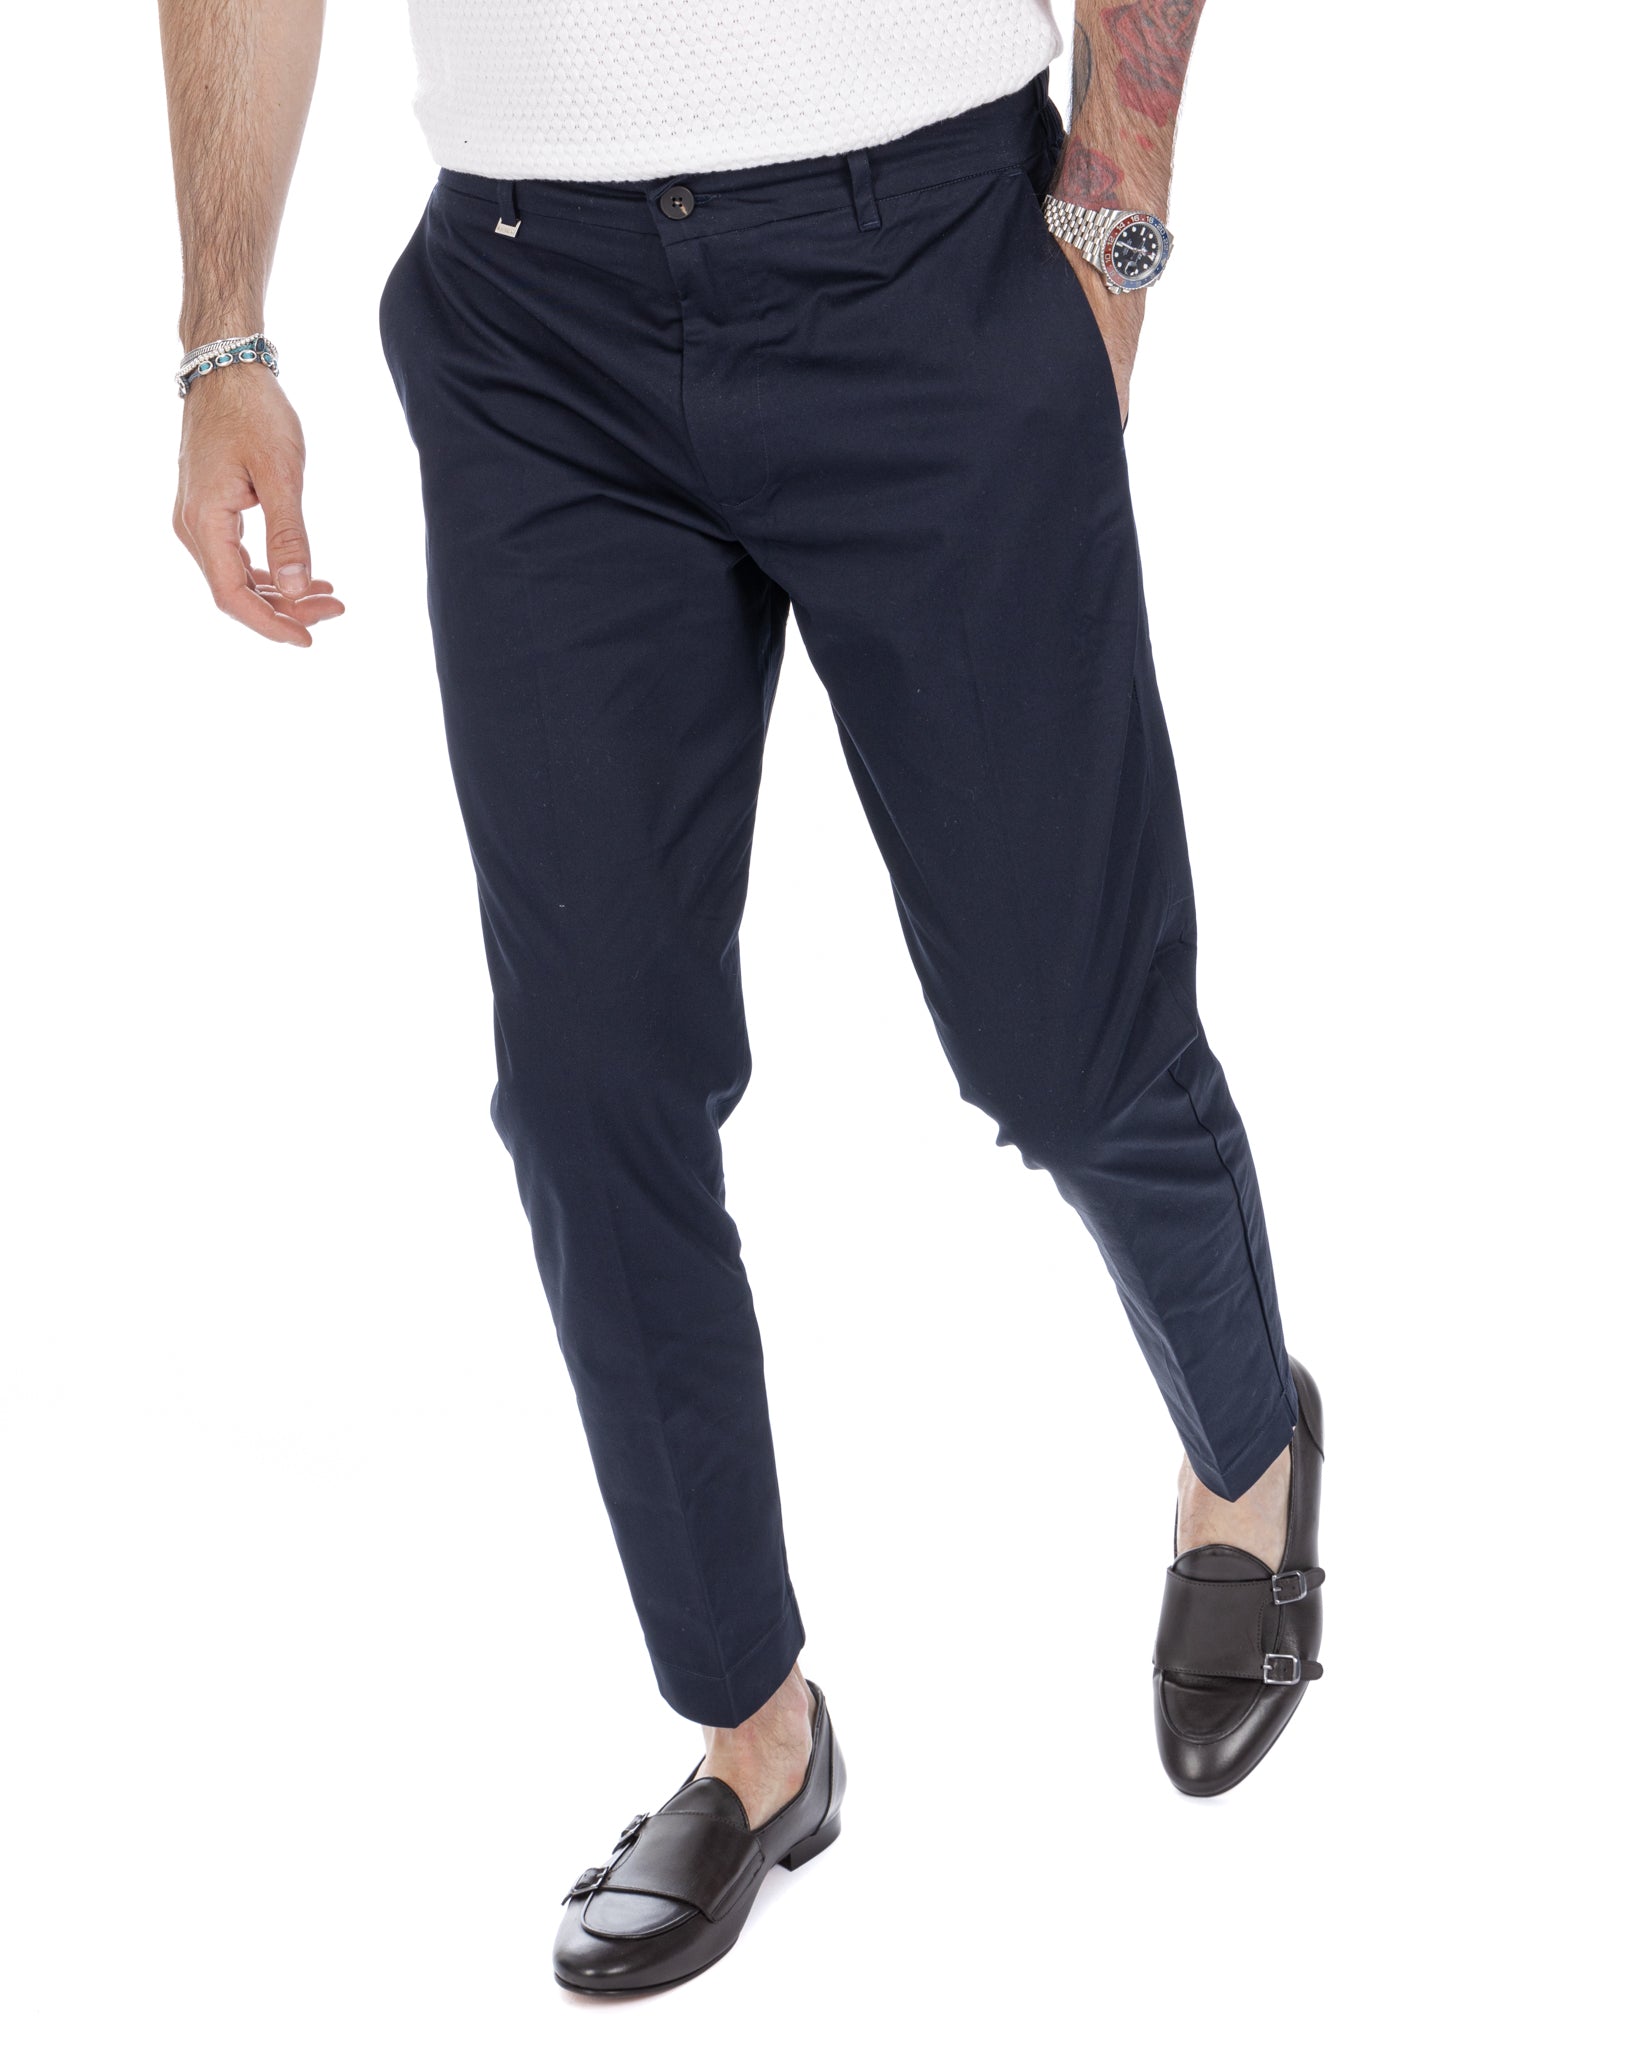 Elder - pantalon capri bleu en coton d'été